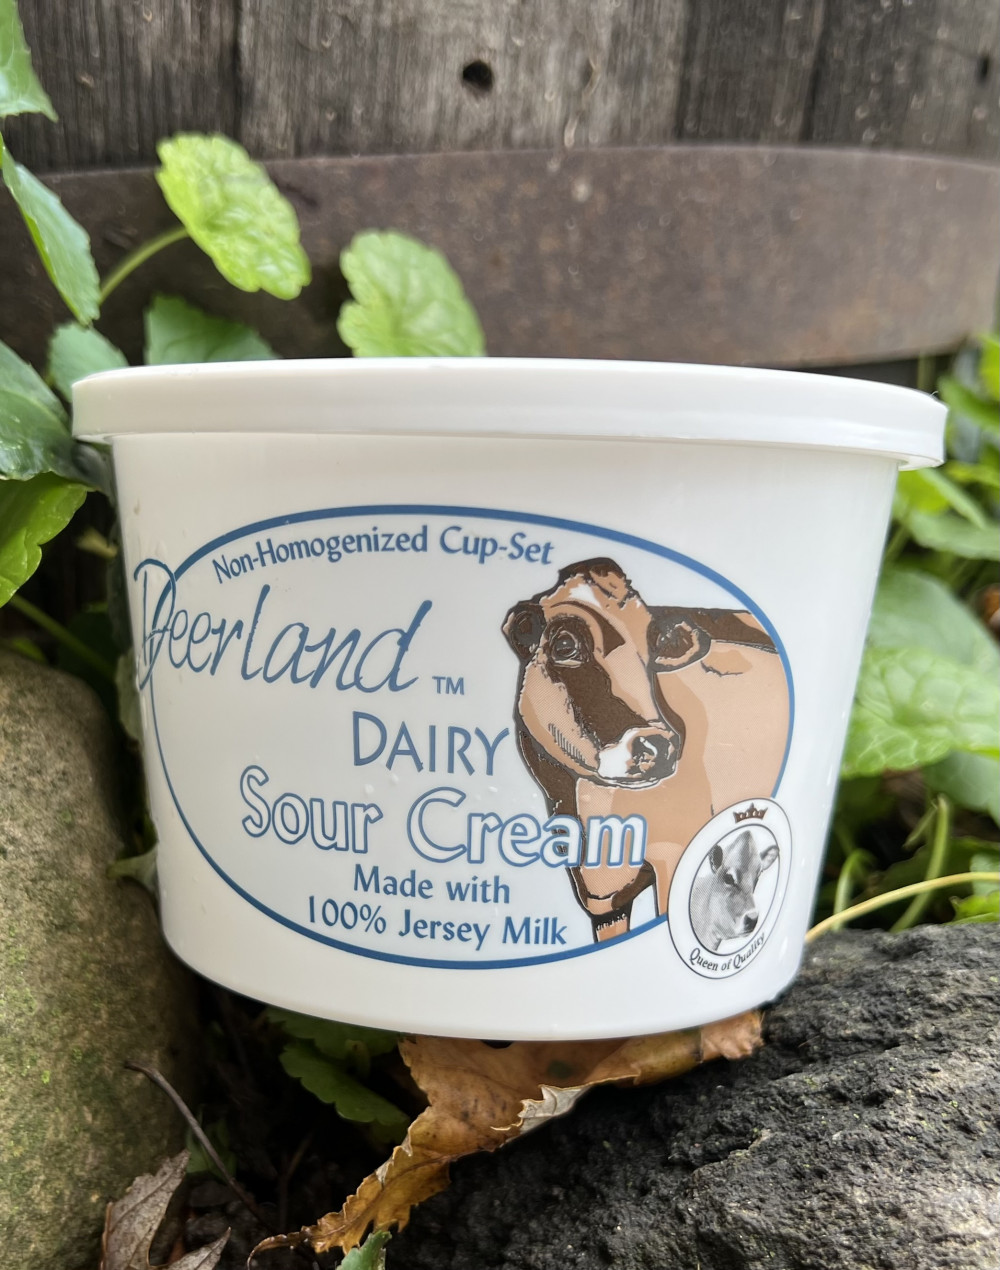 Deerland dairy sour cream